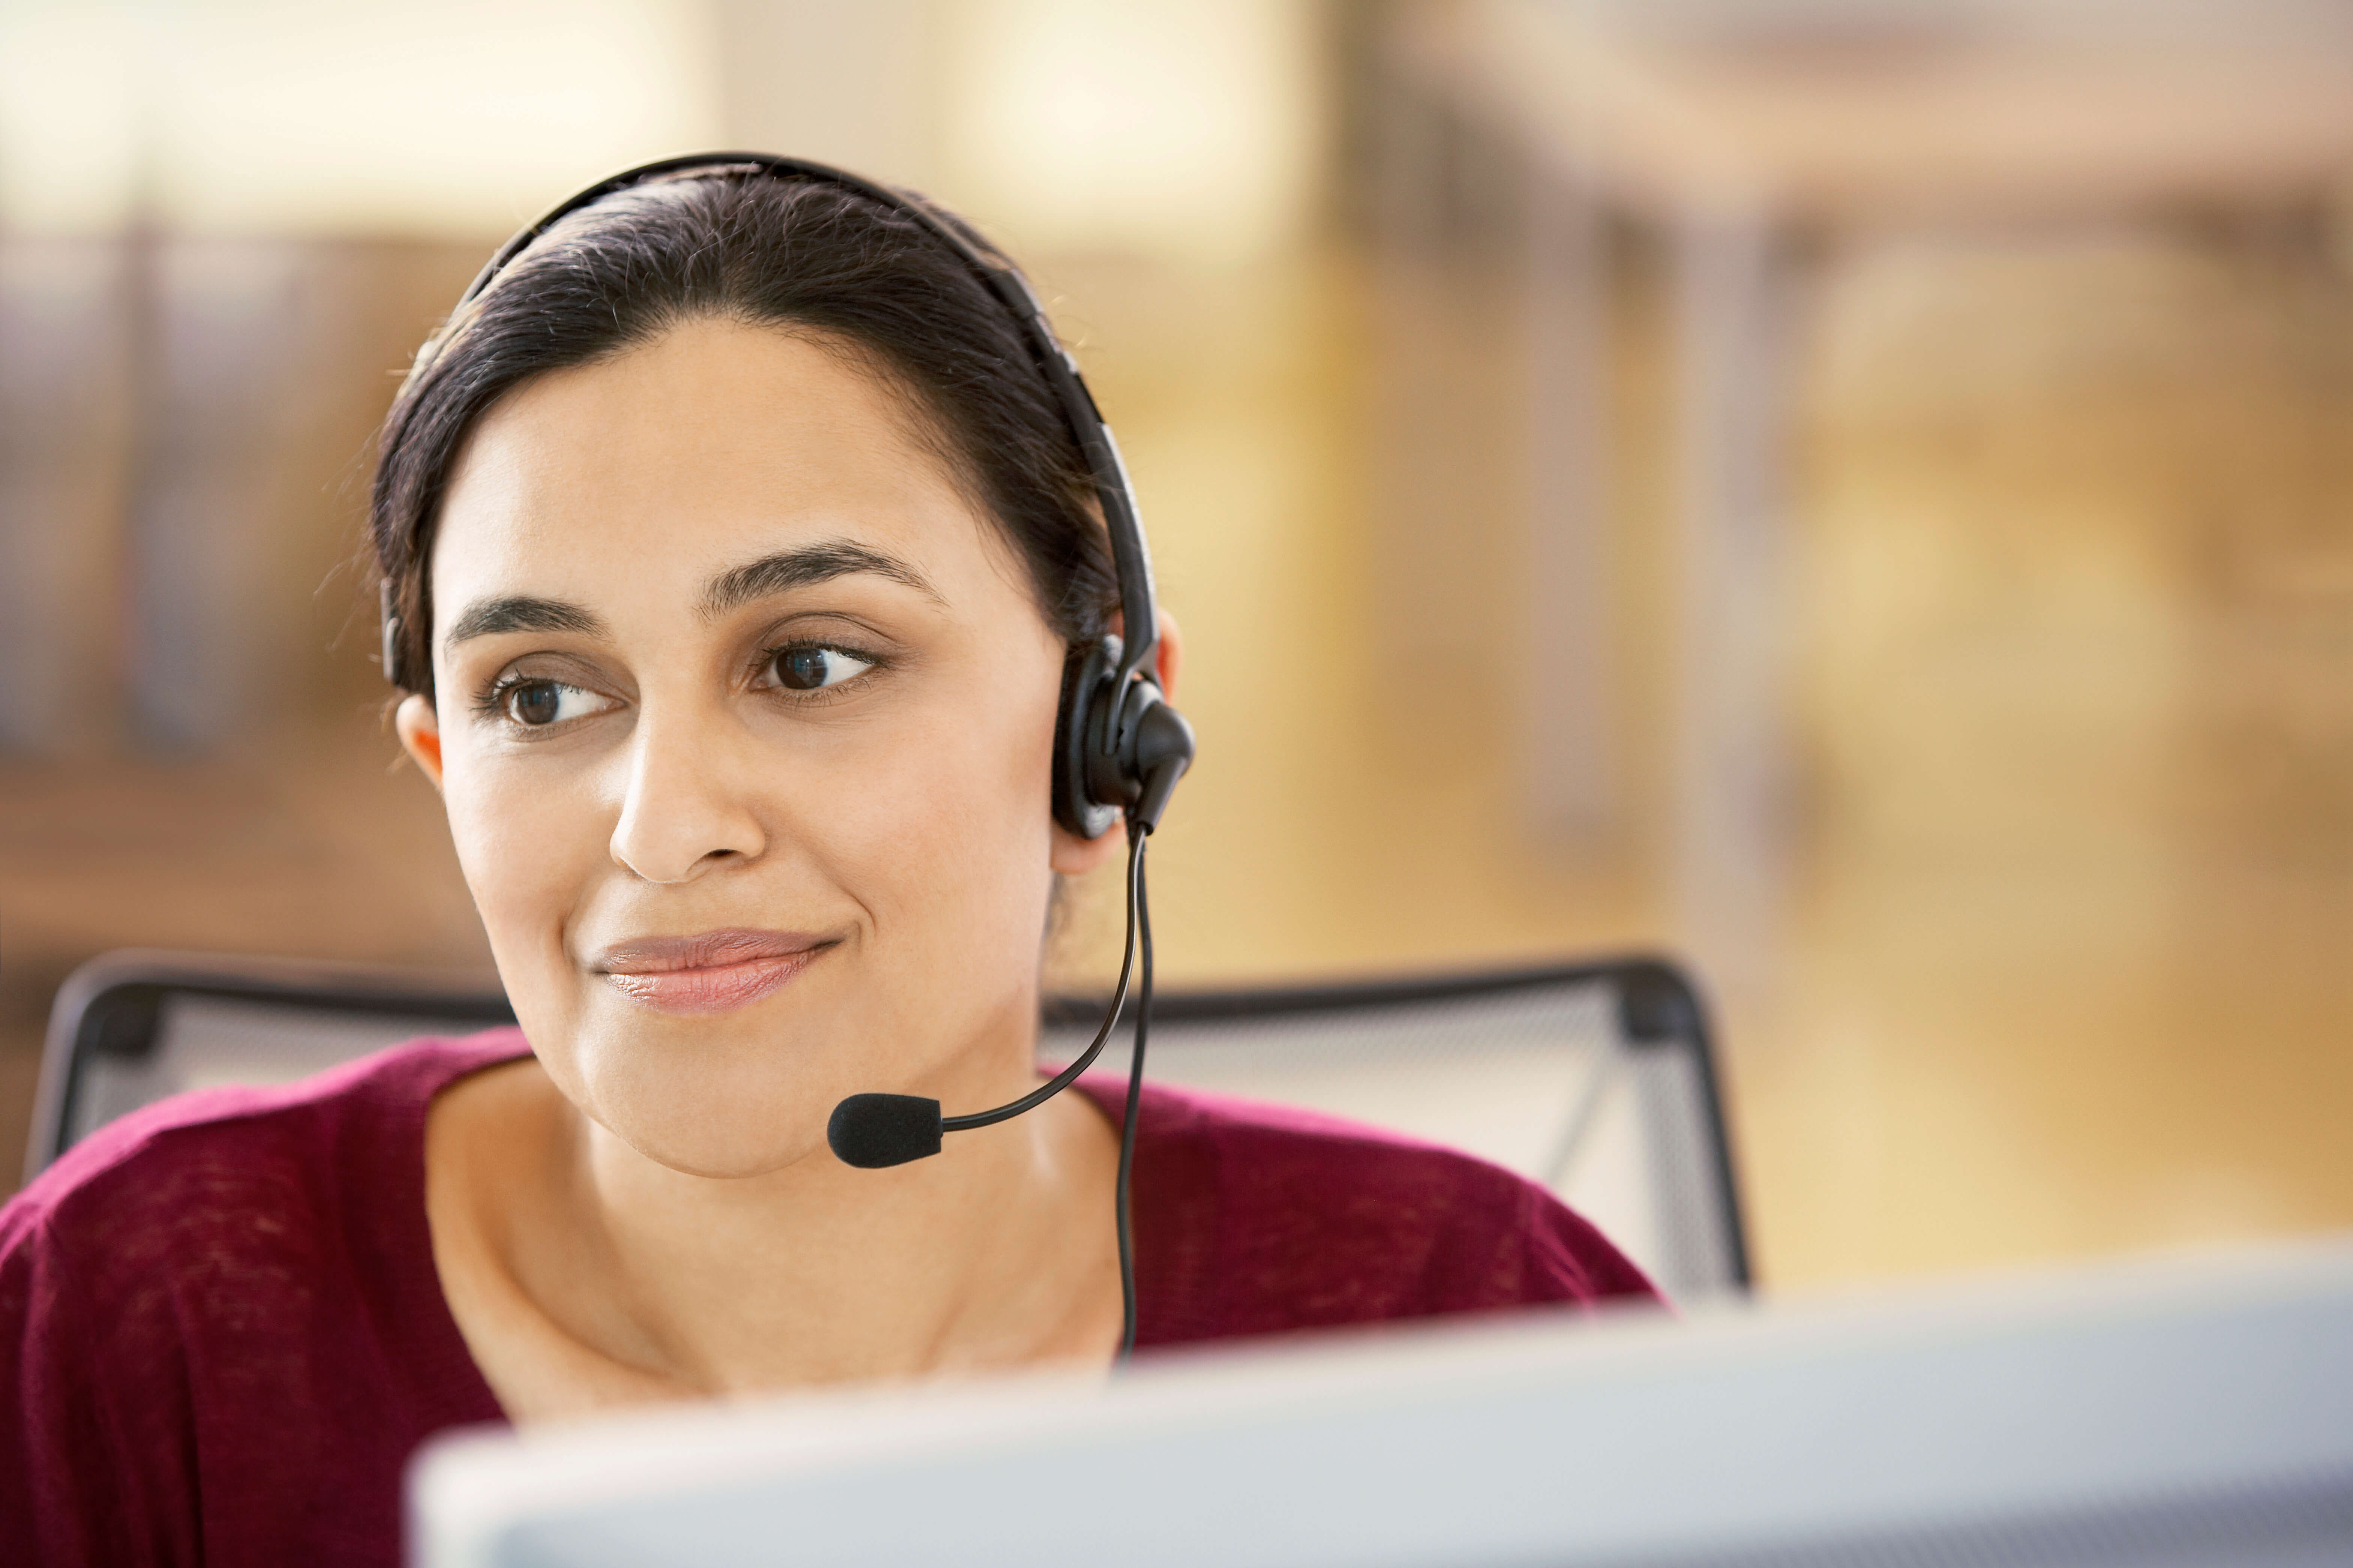 Call center customer service representative with headset